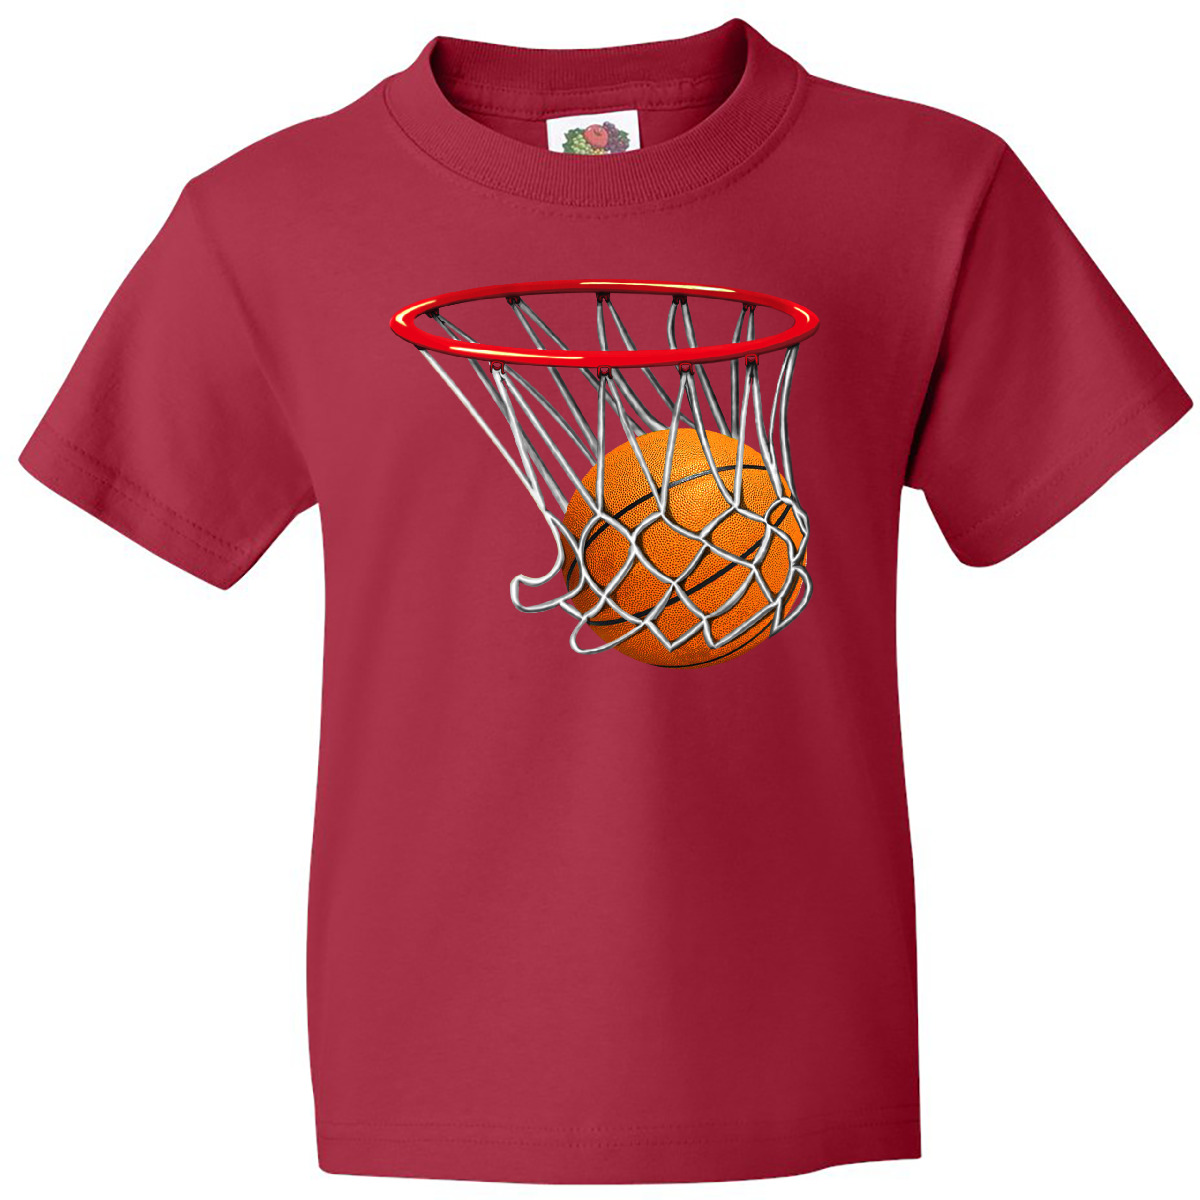 Inktastic Basketball Swish Youth T-Shirt Hoop Shoot Hoops Bball Sports  Baller | eBay